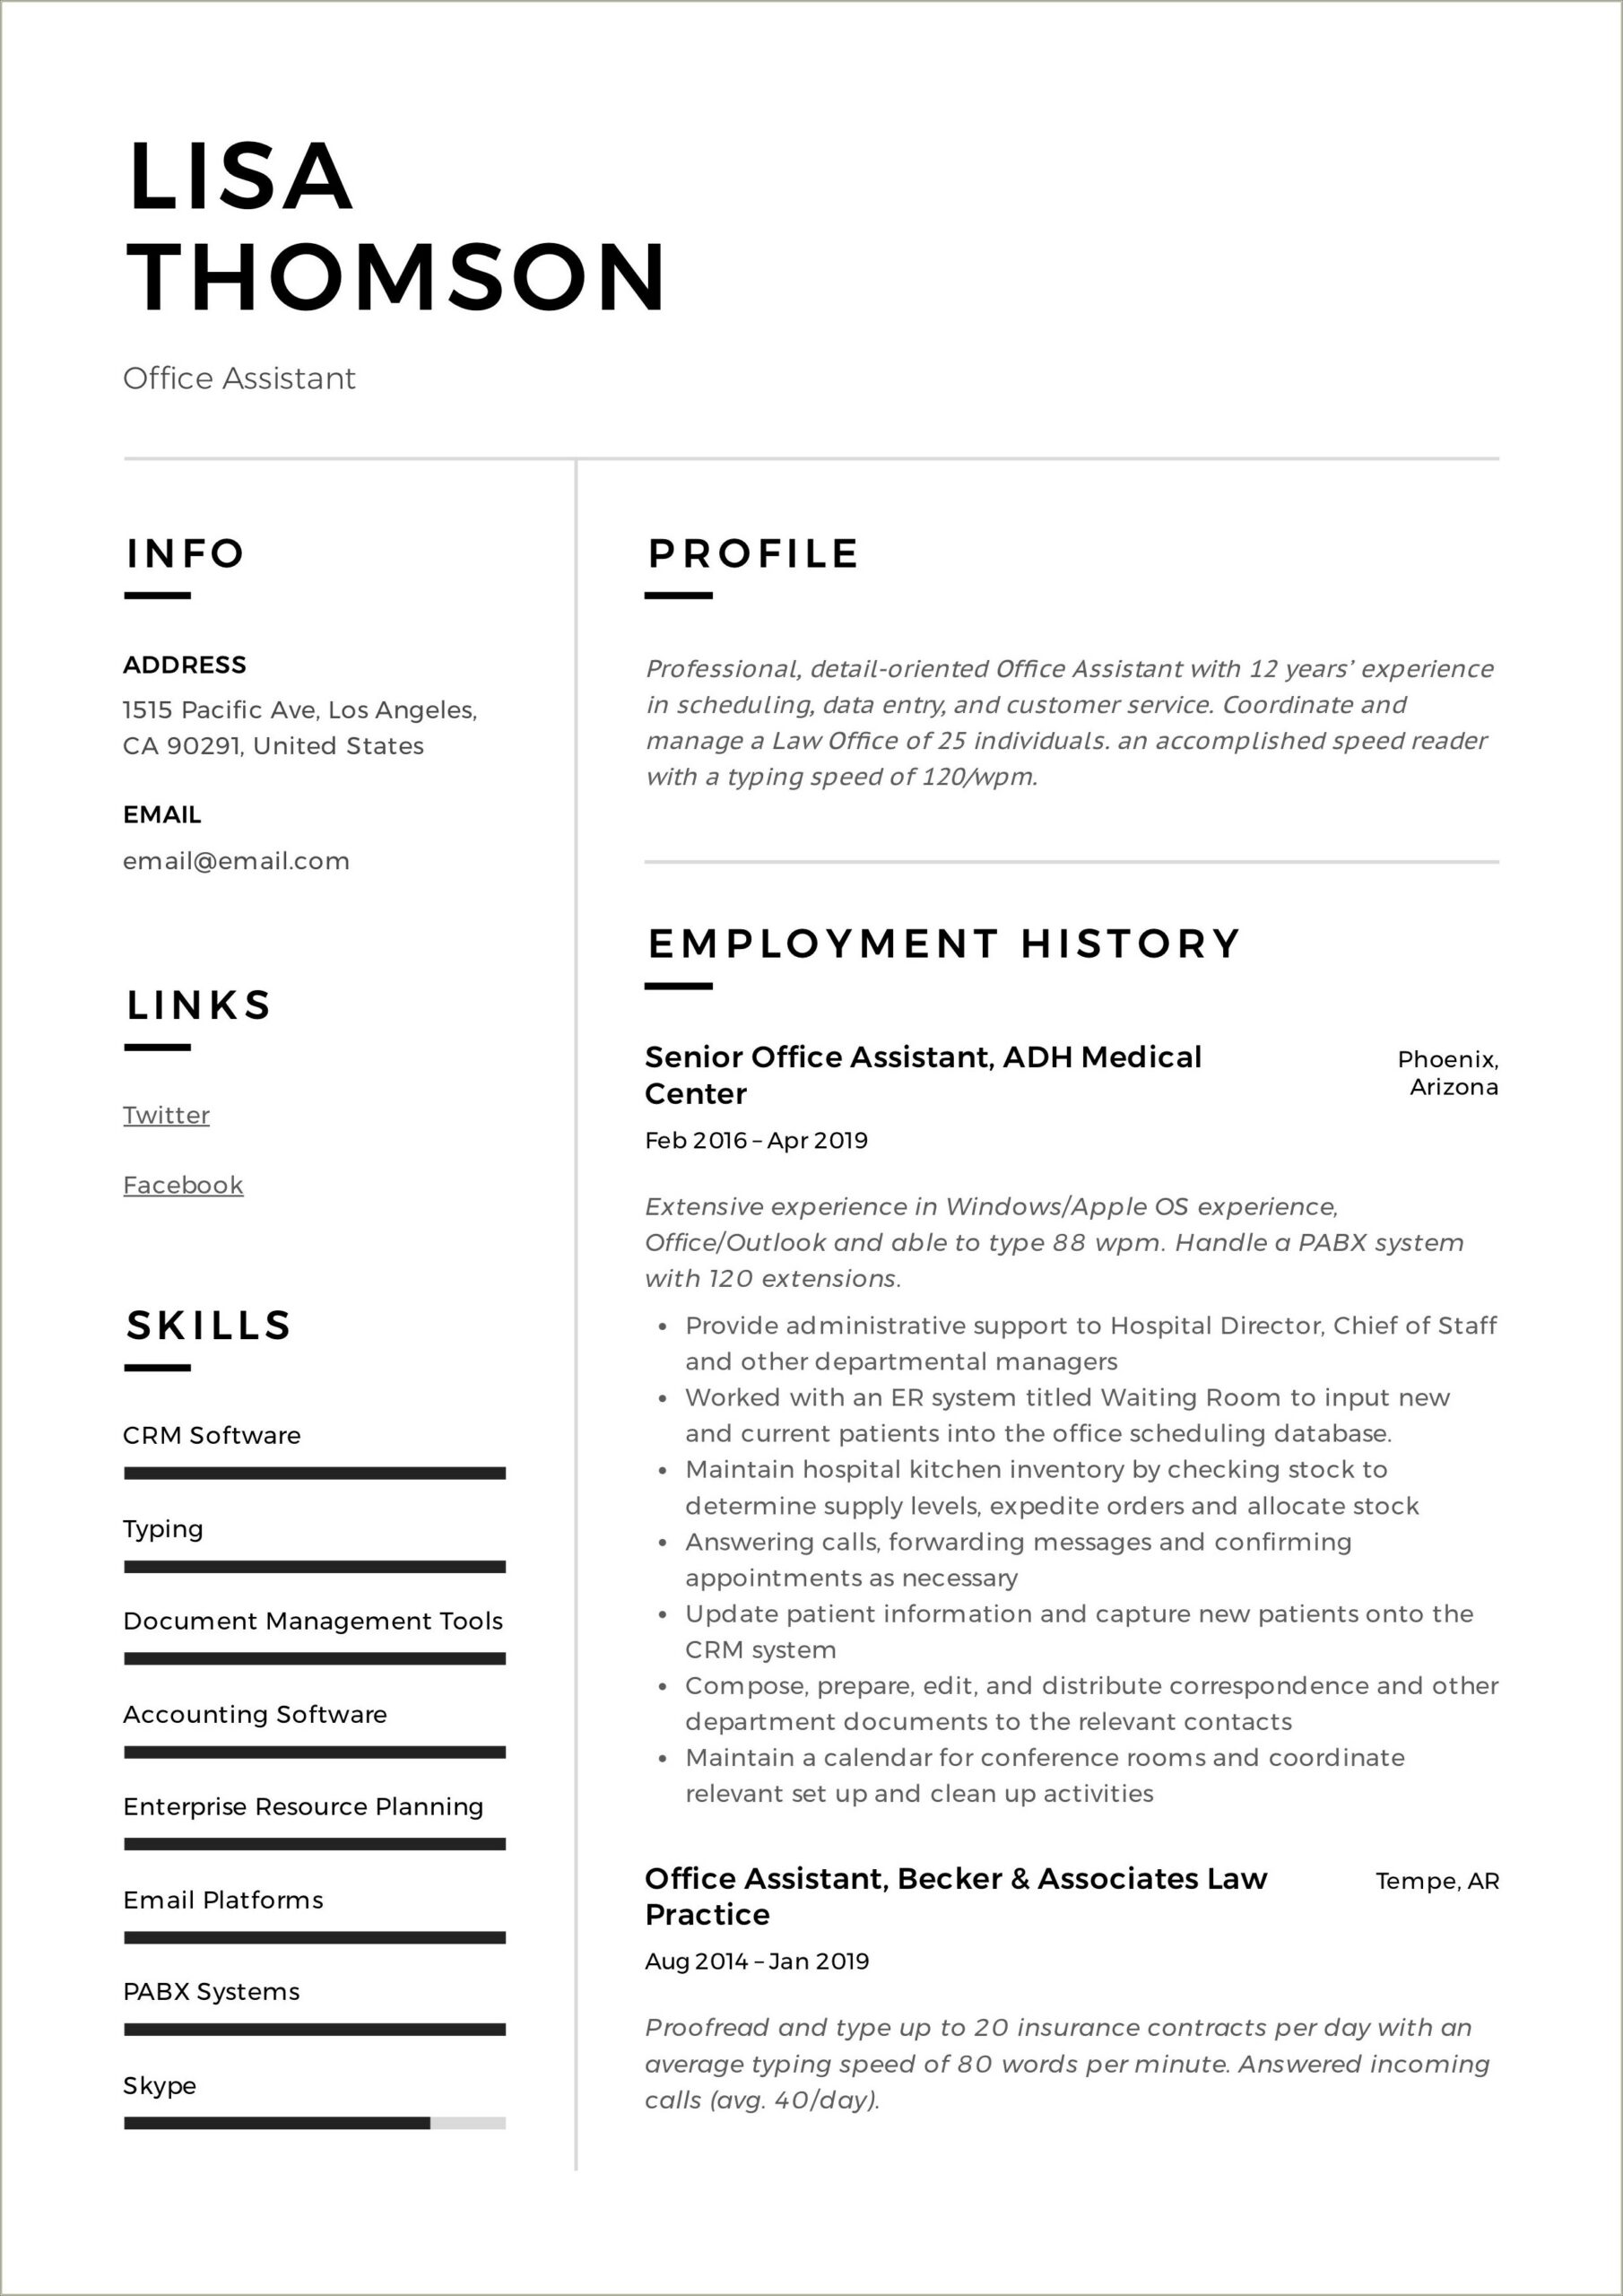 Resume For Office Assistant Job Description